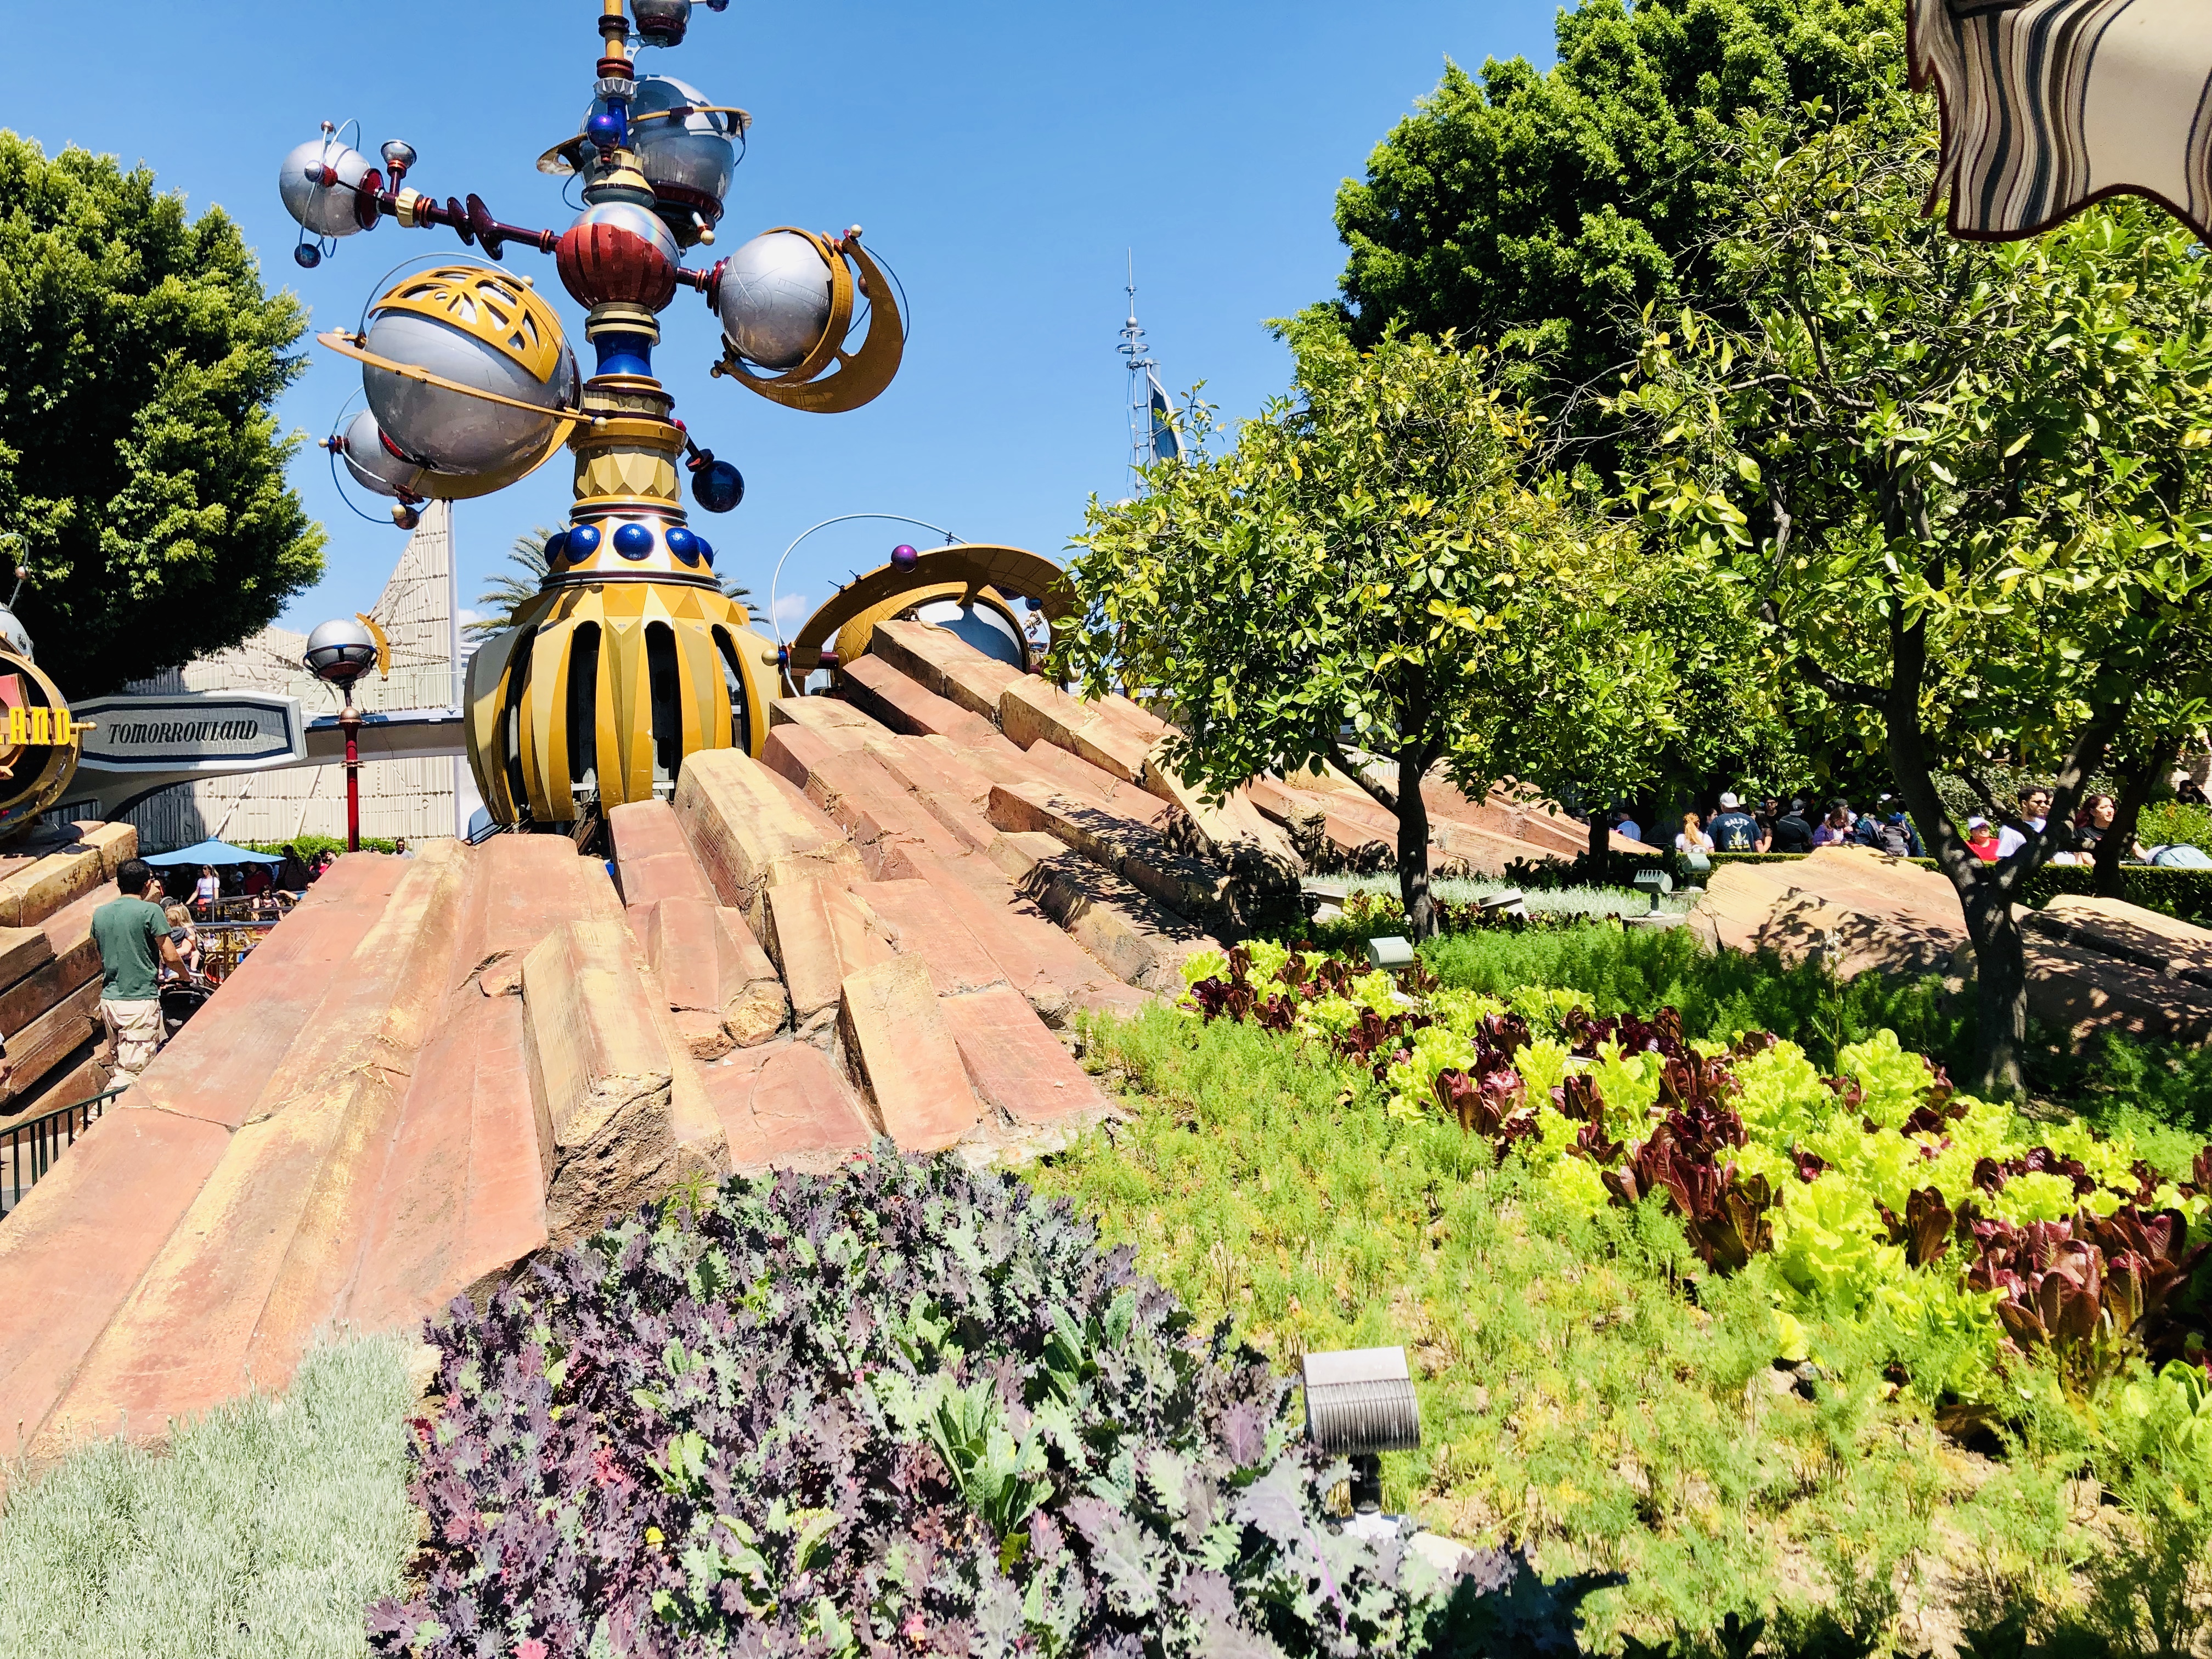 Discovering 5 Secrets of Tomorrowland; edible plants